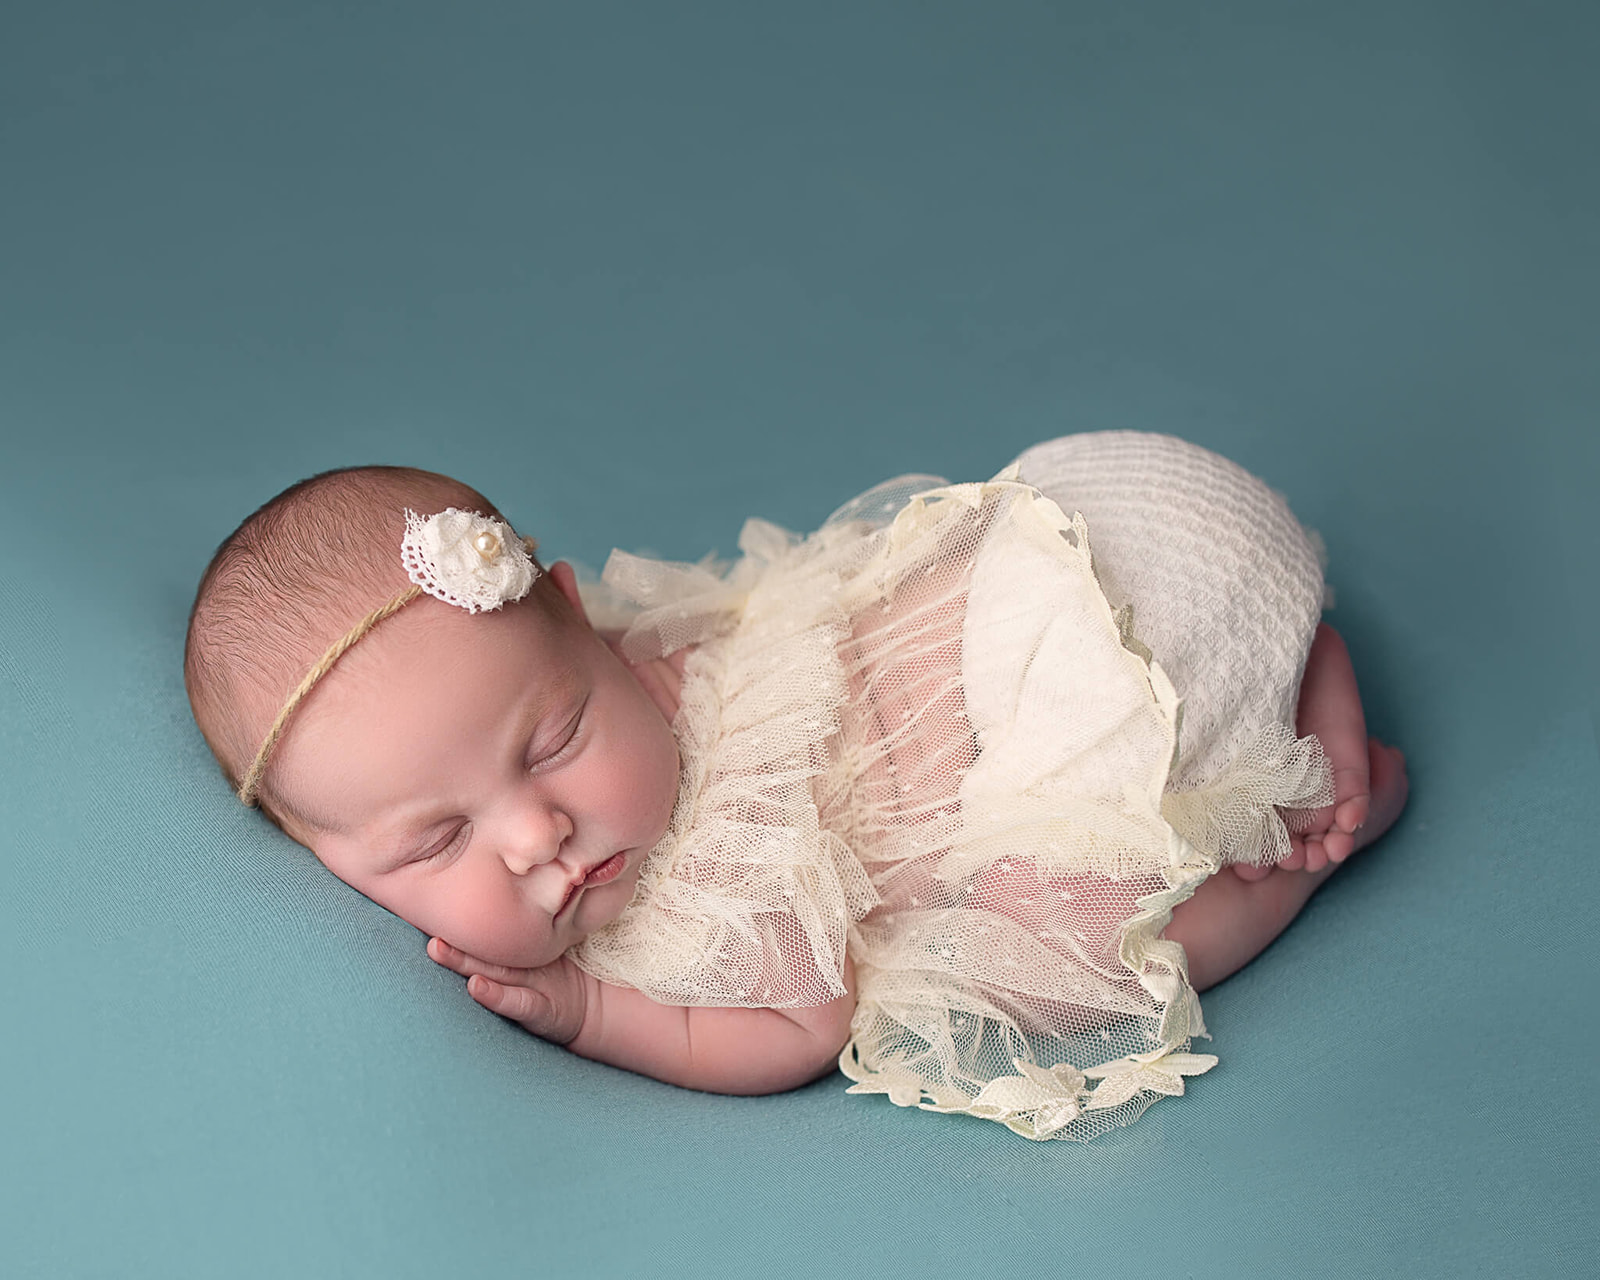 Cleveland OH newborn photographer captures sleepy newborn during newborn photography session in Cleveland OH